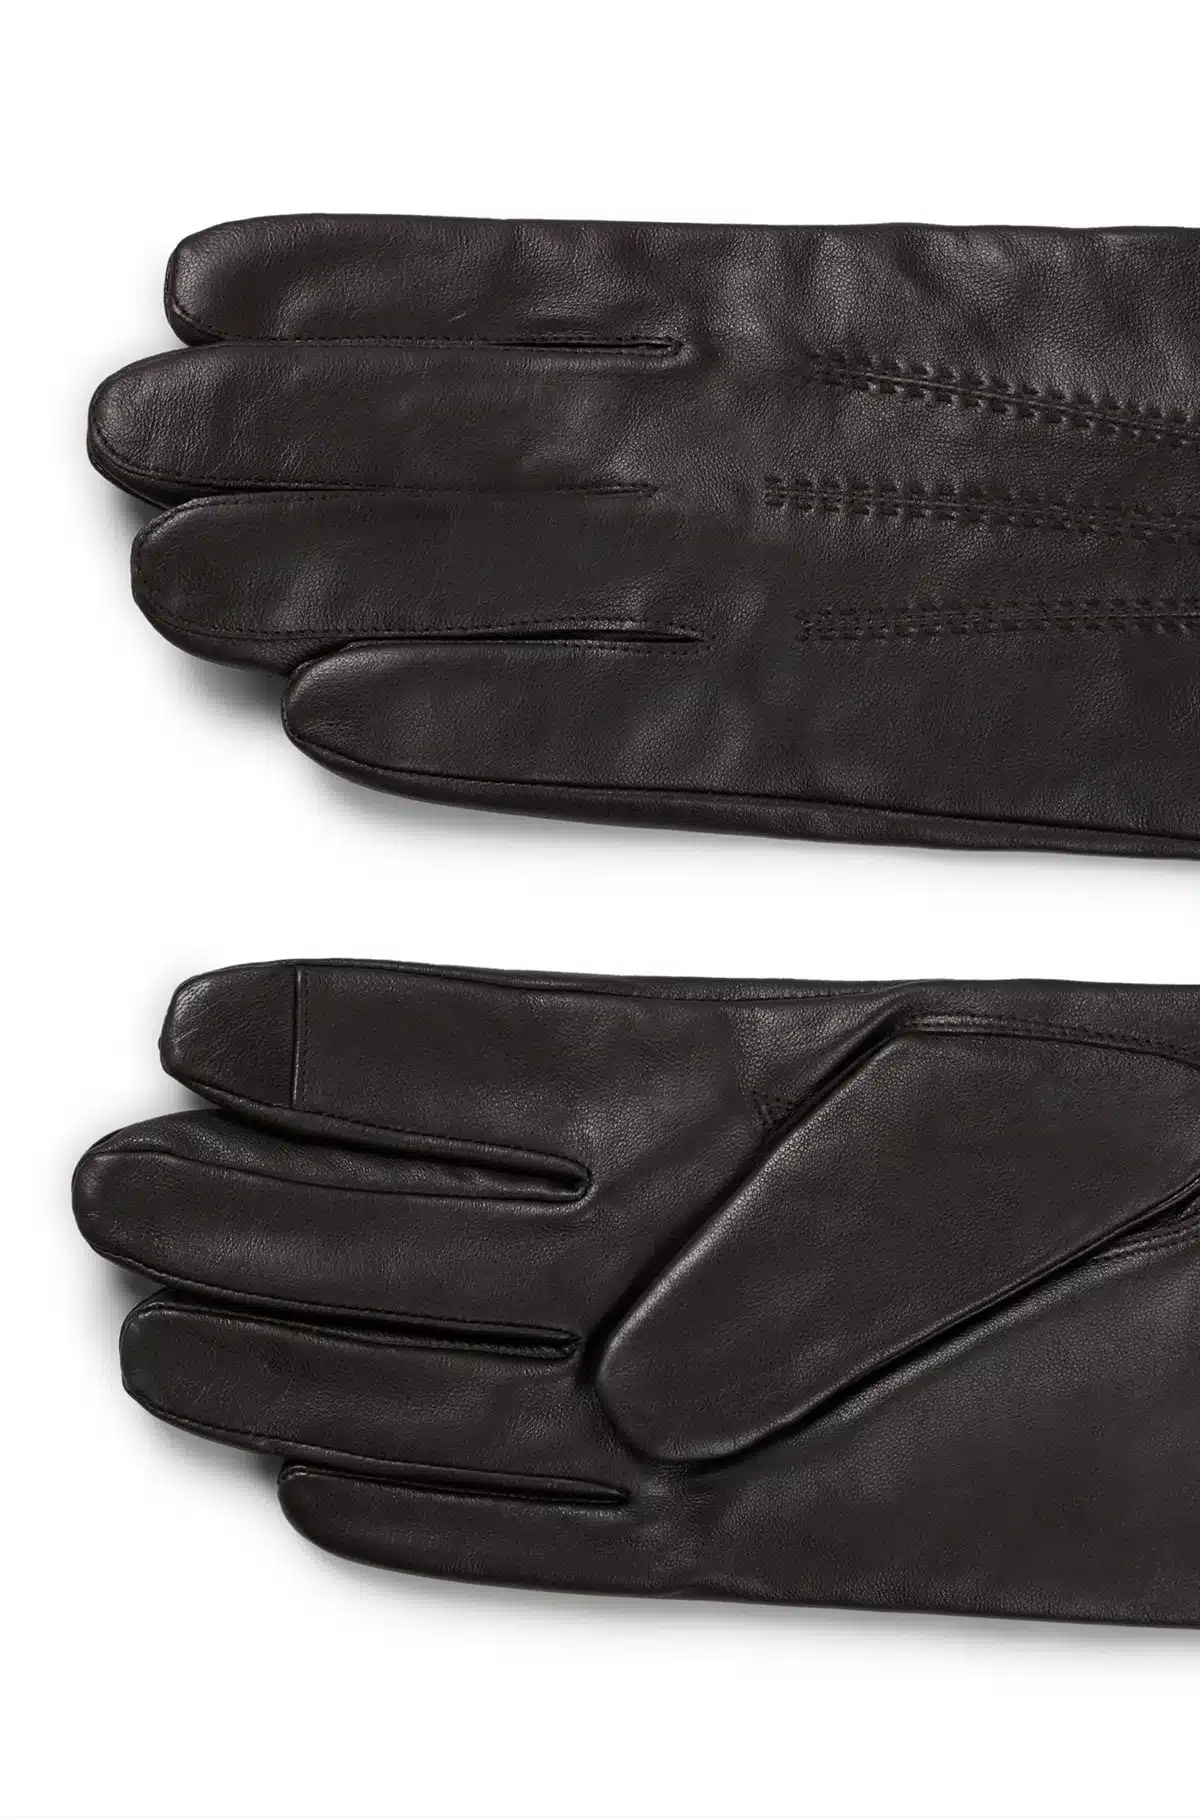 Buy Boss Hainz Fashion Store Gloves Scandinavian - Dark Leather Brown